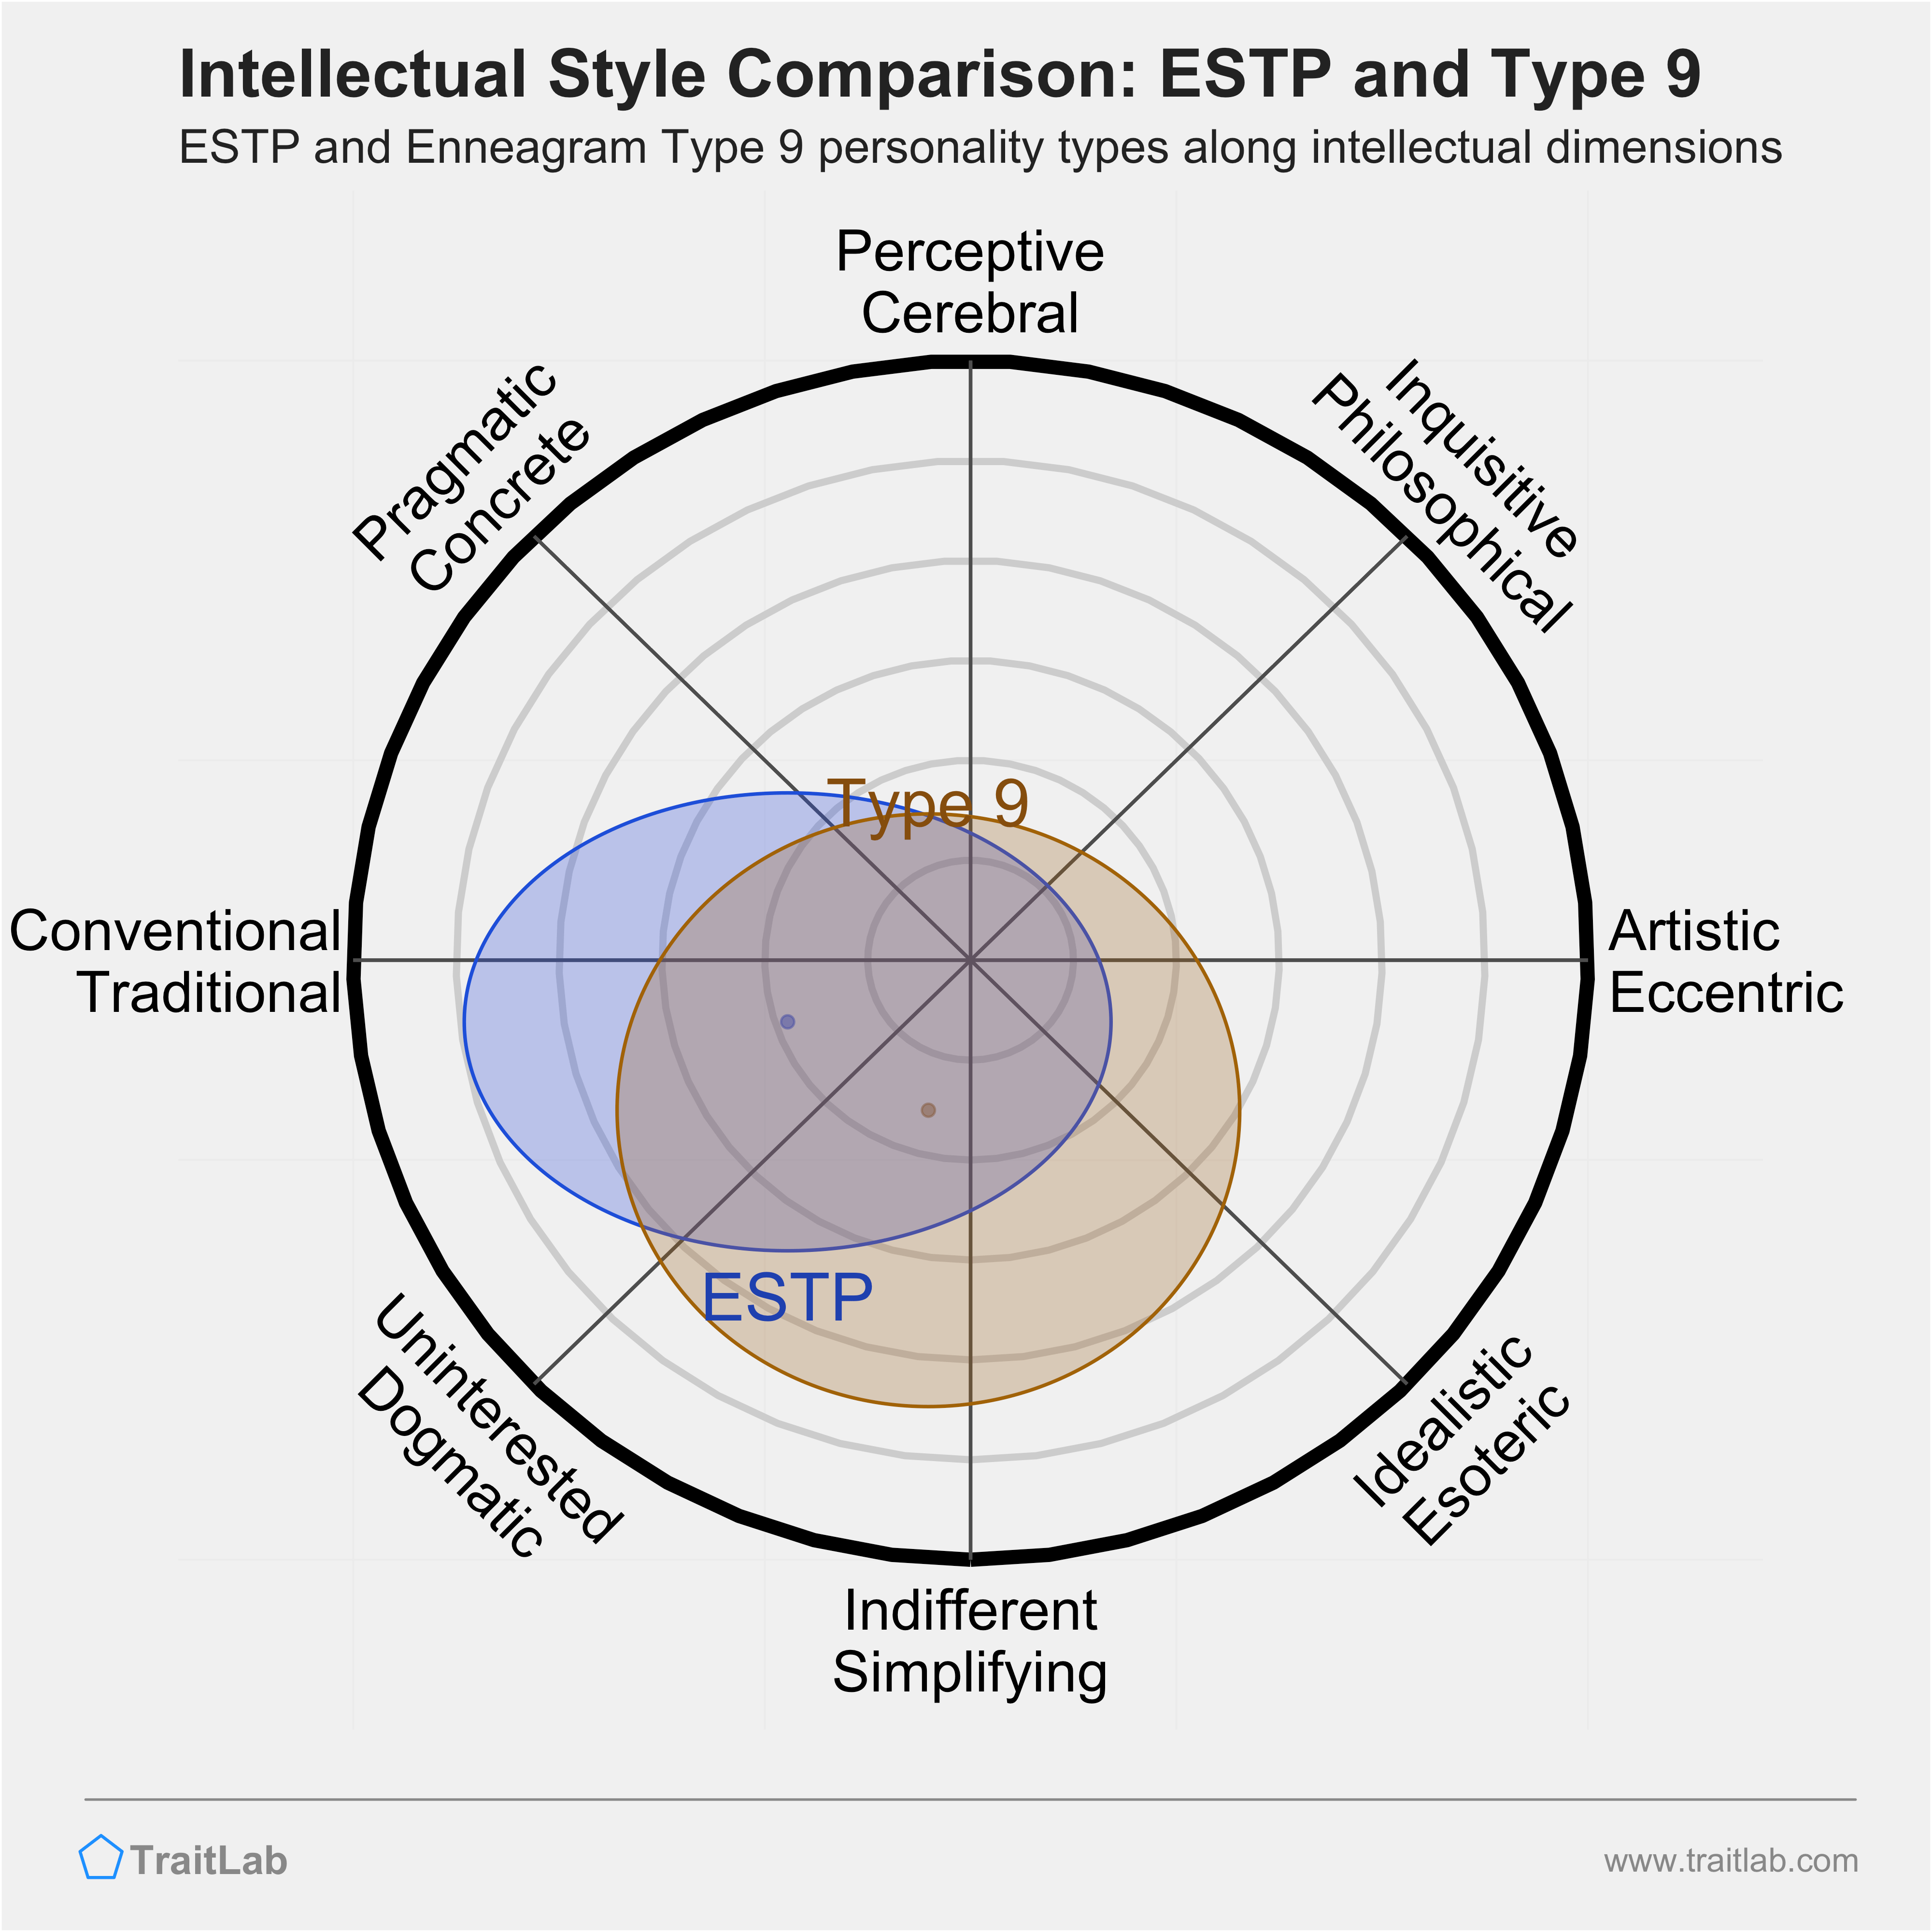 ESTP and Type 9 comparison across intellectual dimensions